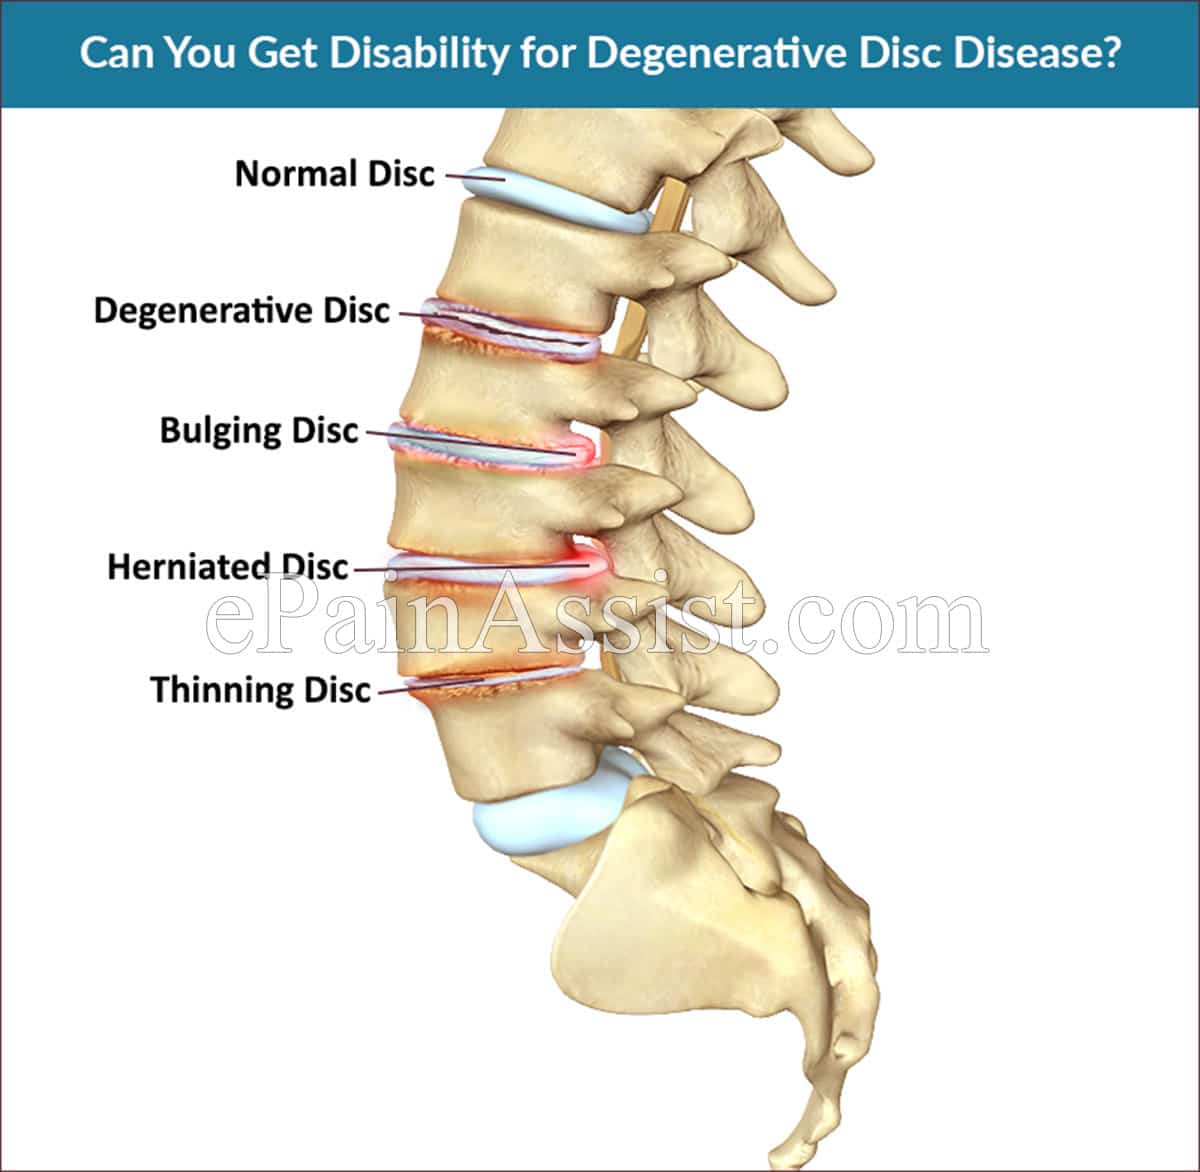 Disability Benefits for Degenerative Disc Disease